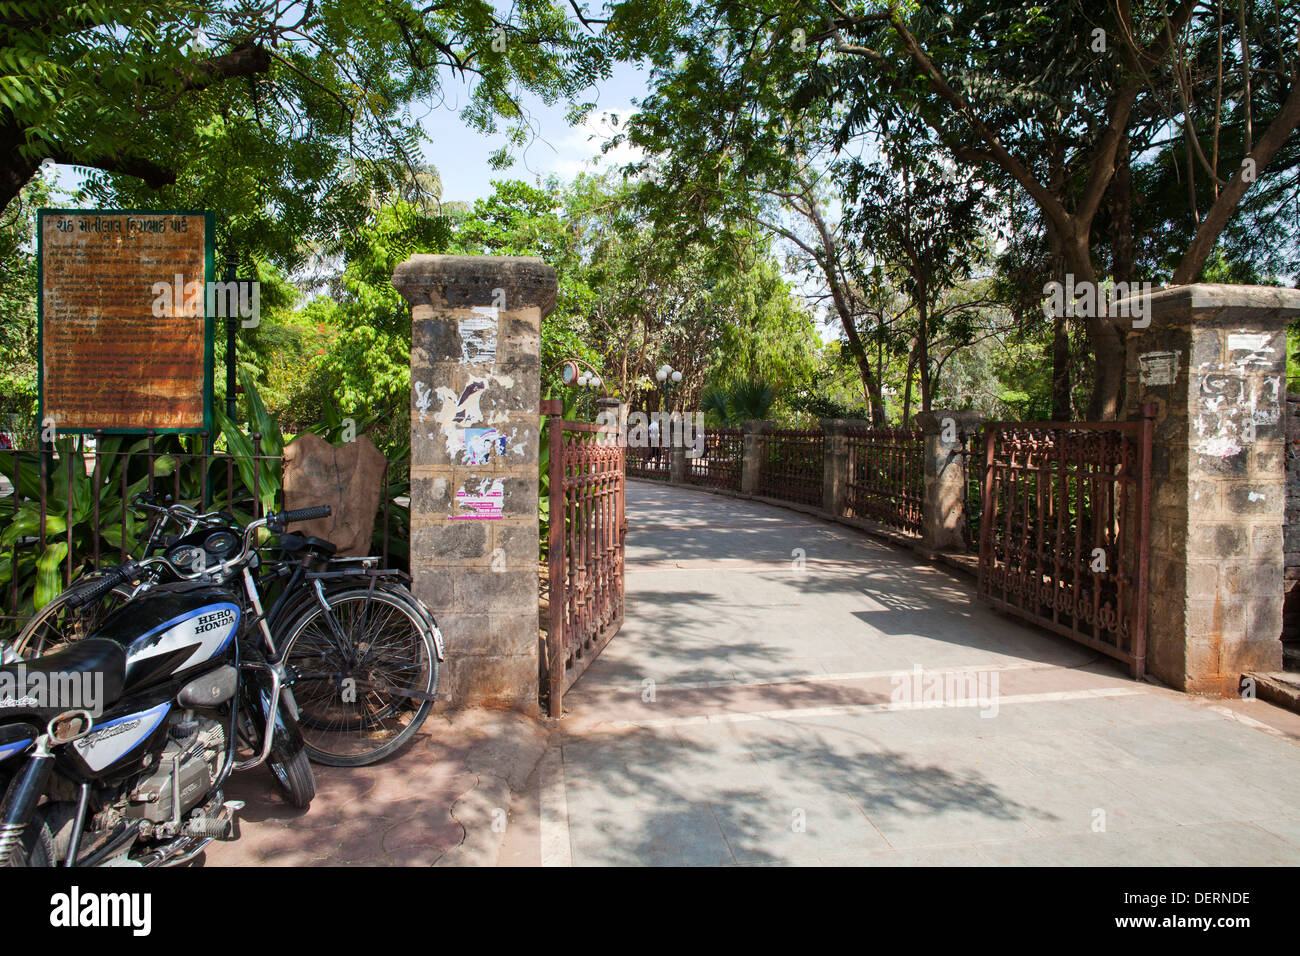 Cancello di ingresso di un giardino, giardino di legge, Ahmedabad, Gujarat, India Foto Stock